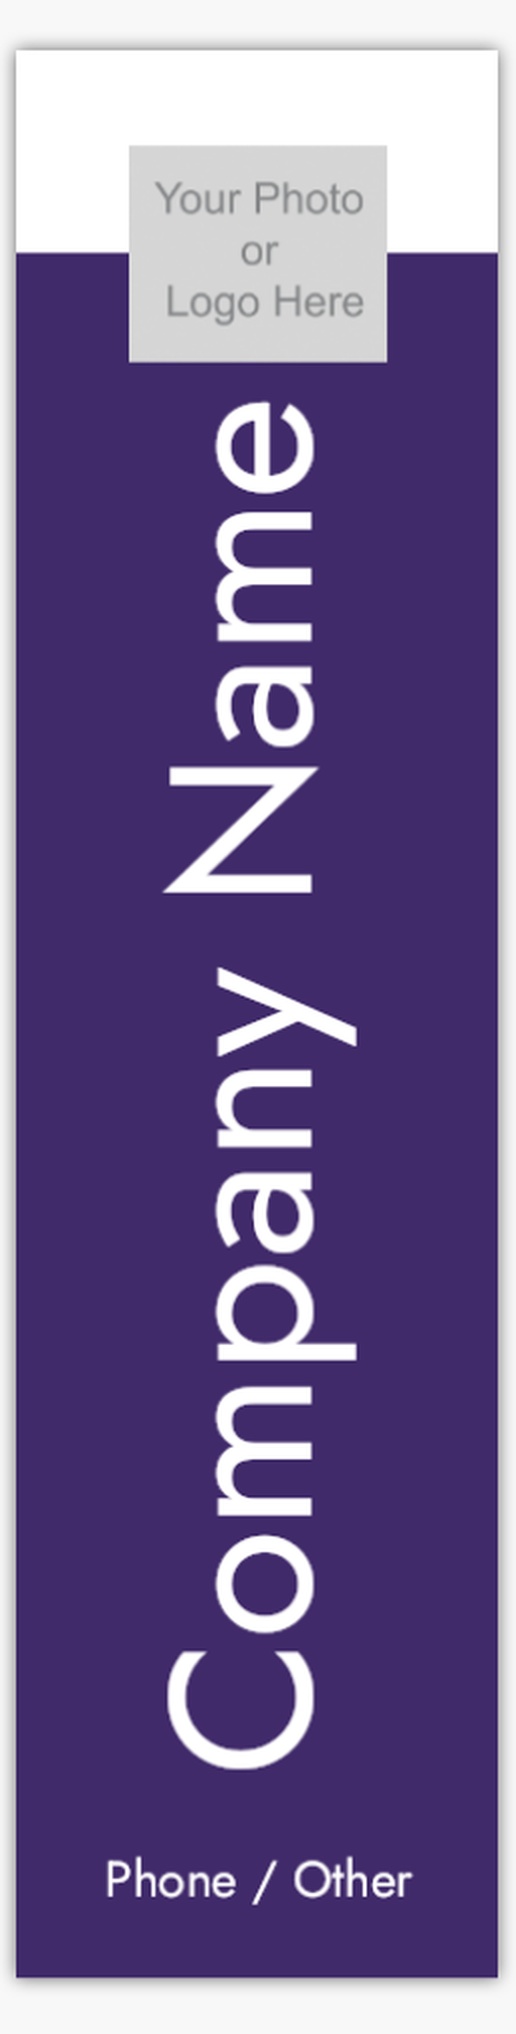 A temiz čistý purple white design with 1 uploads